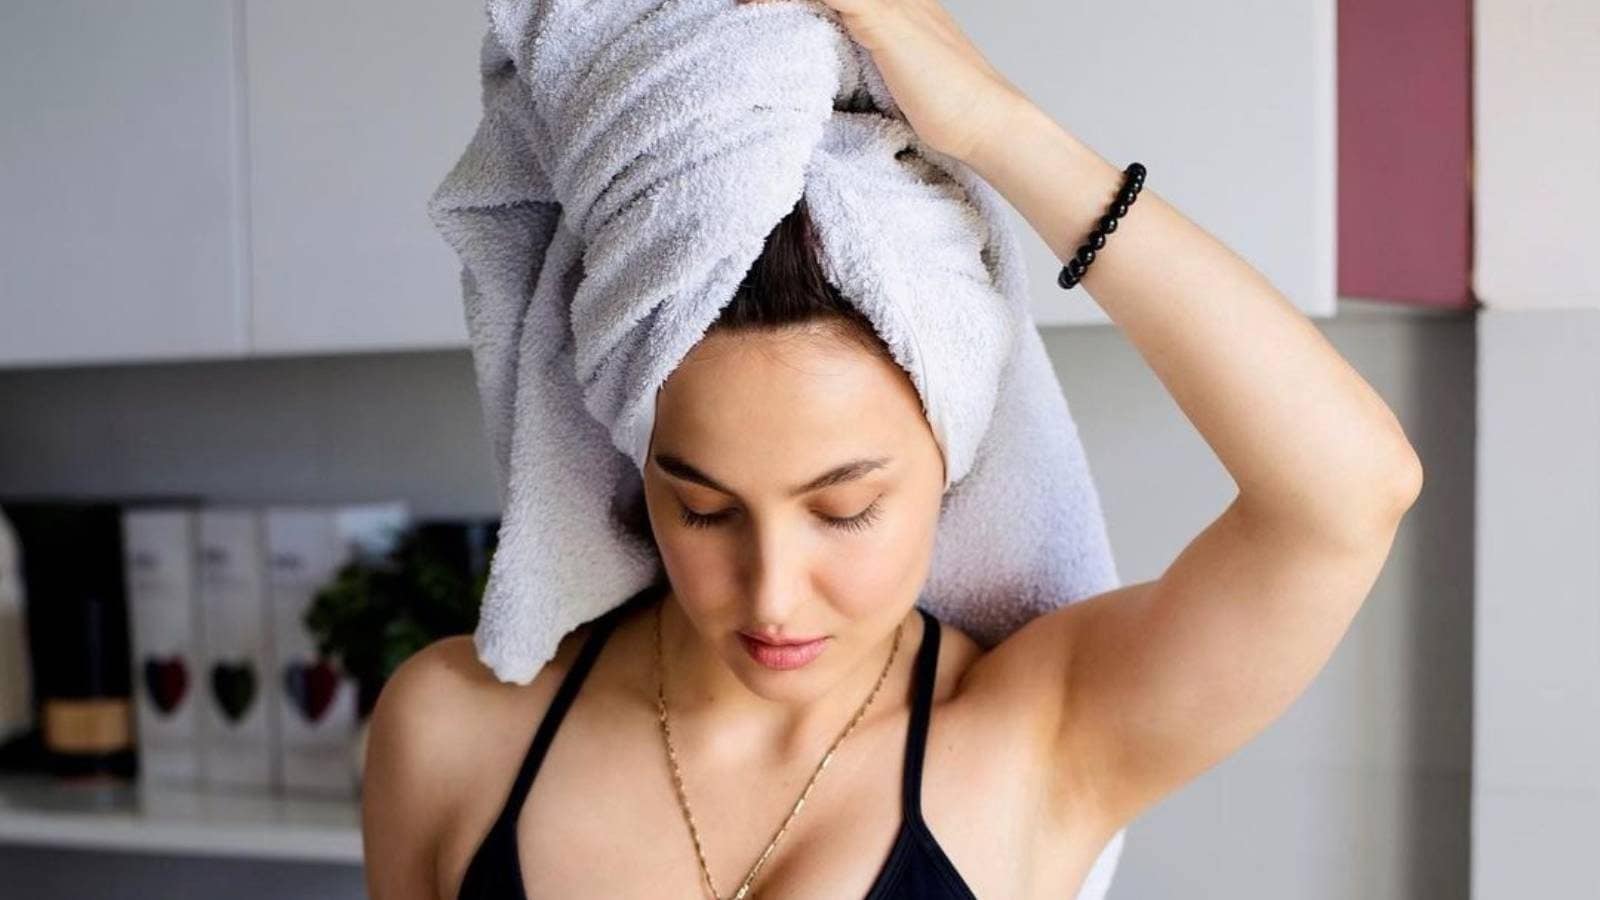 Девушка с полотенцем на голове. Женщина в полотенце пьется. Девушка держит полотенце. Селфи с полотенцем на голове. Call myself